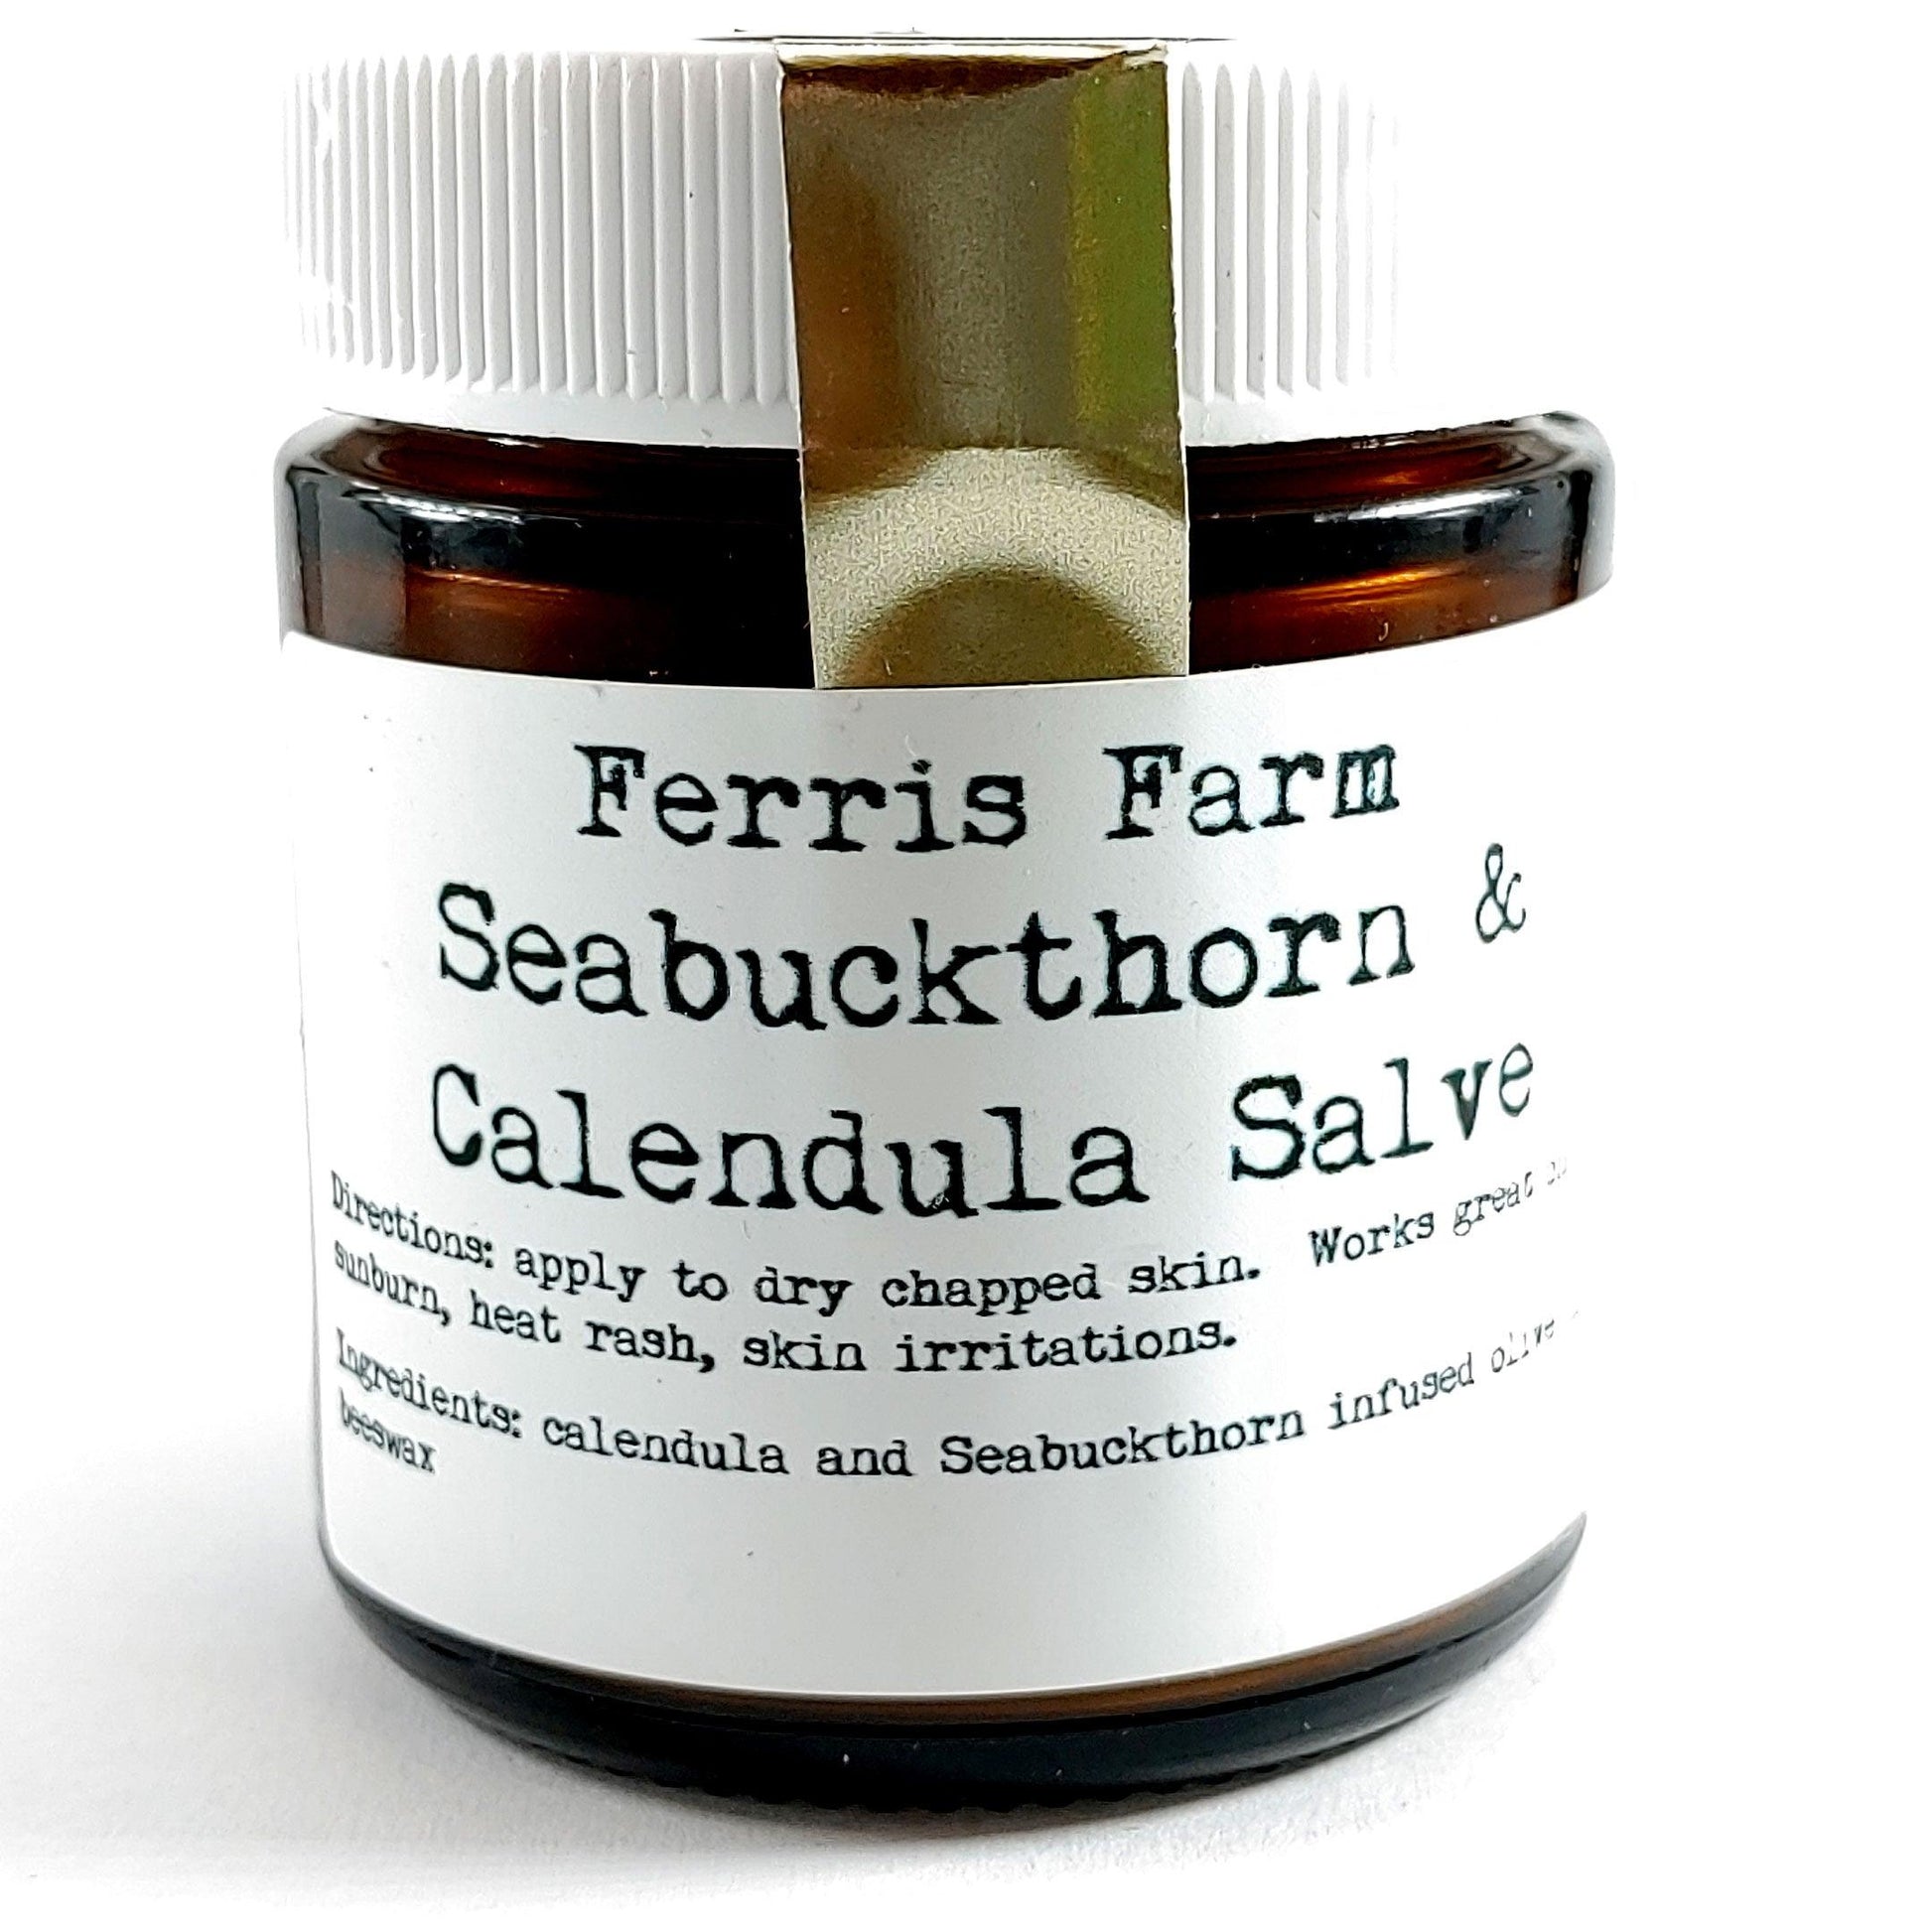 Seabuckthorn & Calendula Salve